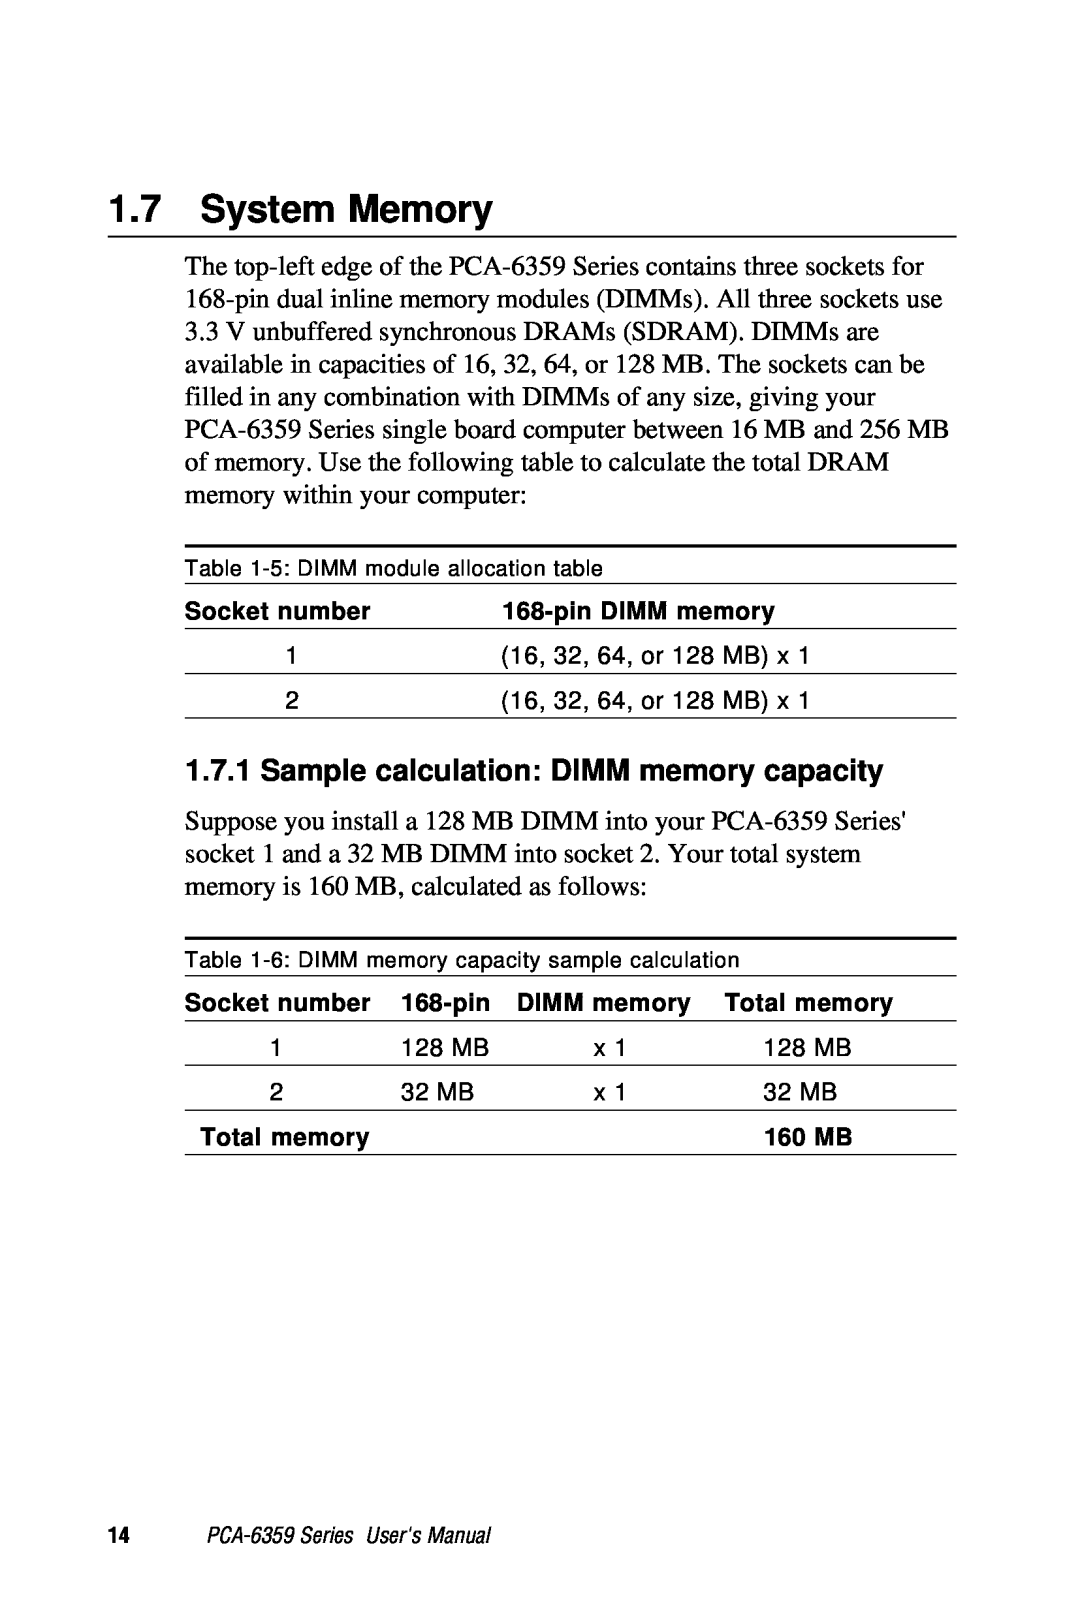 Advantech PCA-6359 user manual System Memory, Sample calculation DIMM memory capacity 